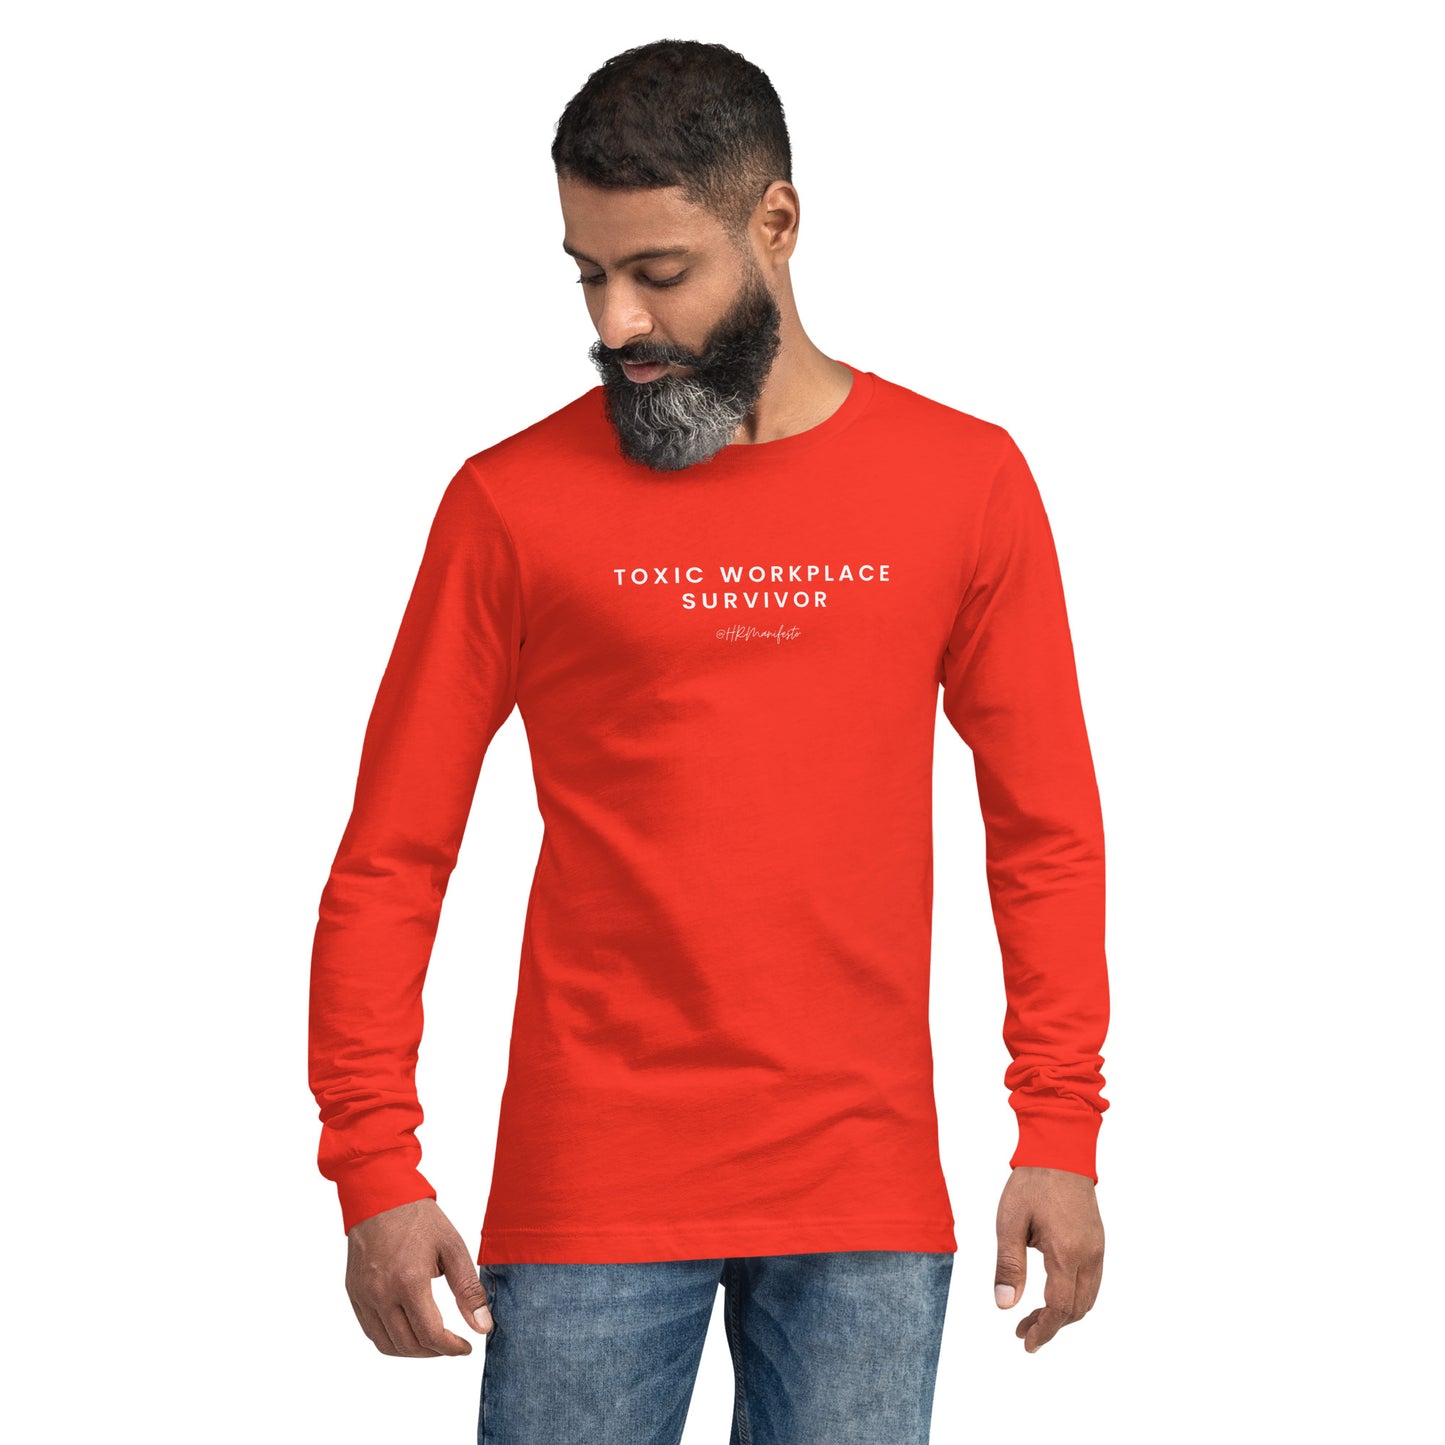 "Toxic Workplace Survivor" Unisex Long Sleeve T-Shirt